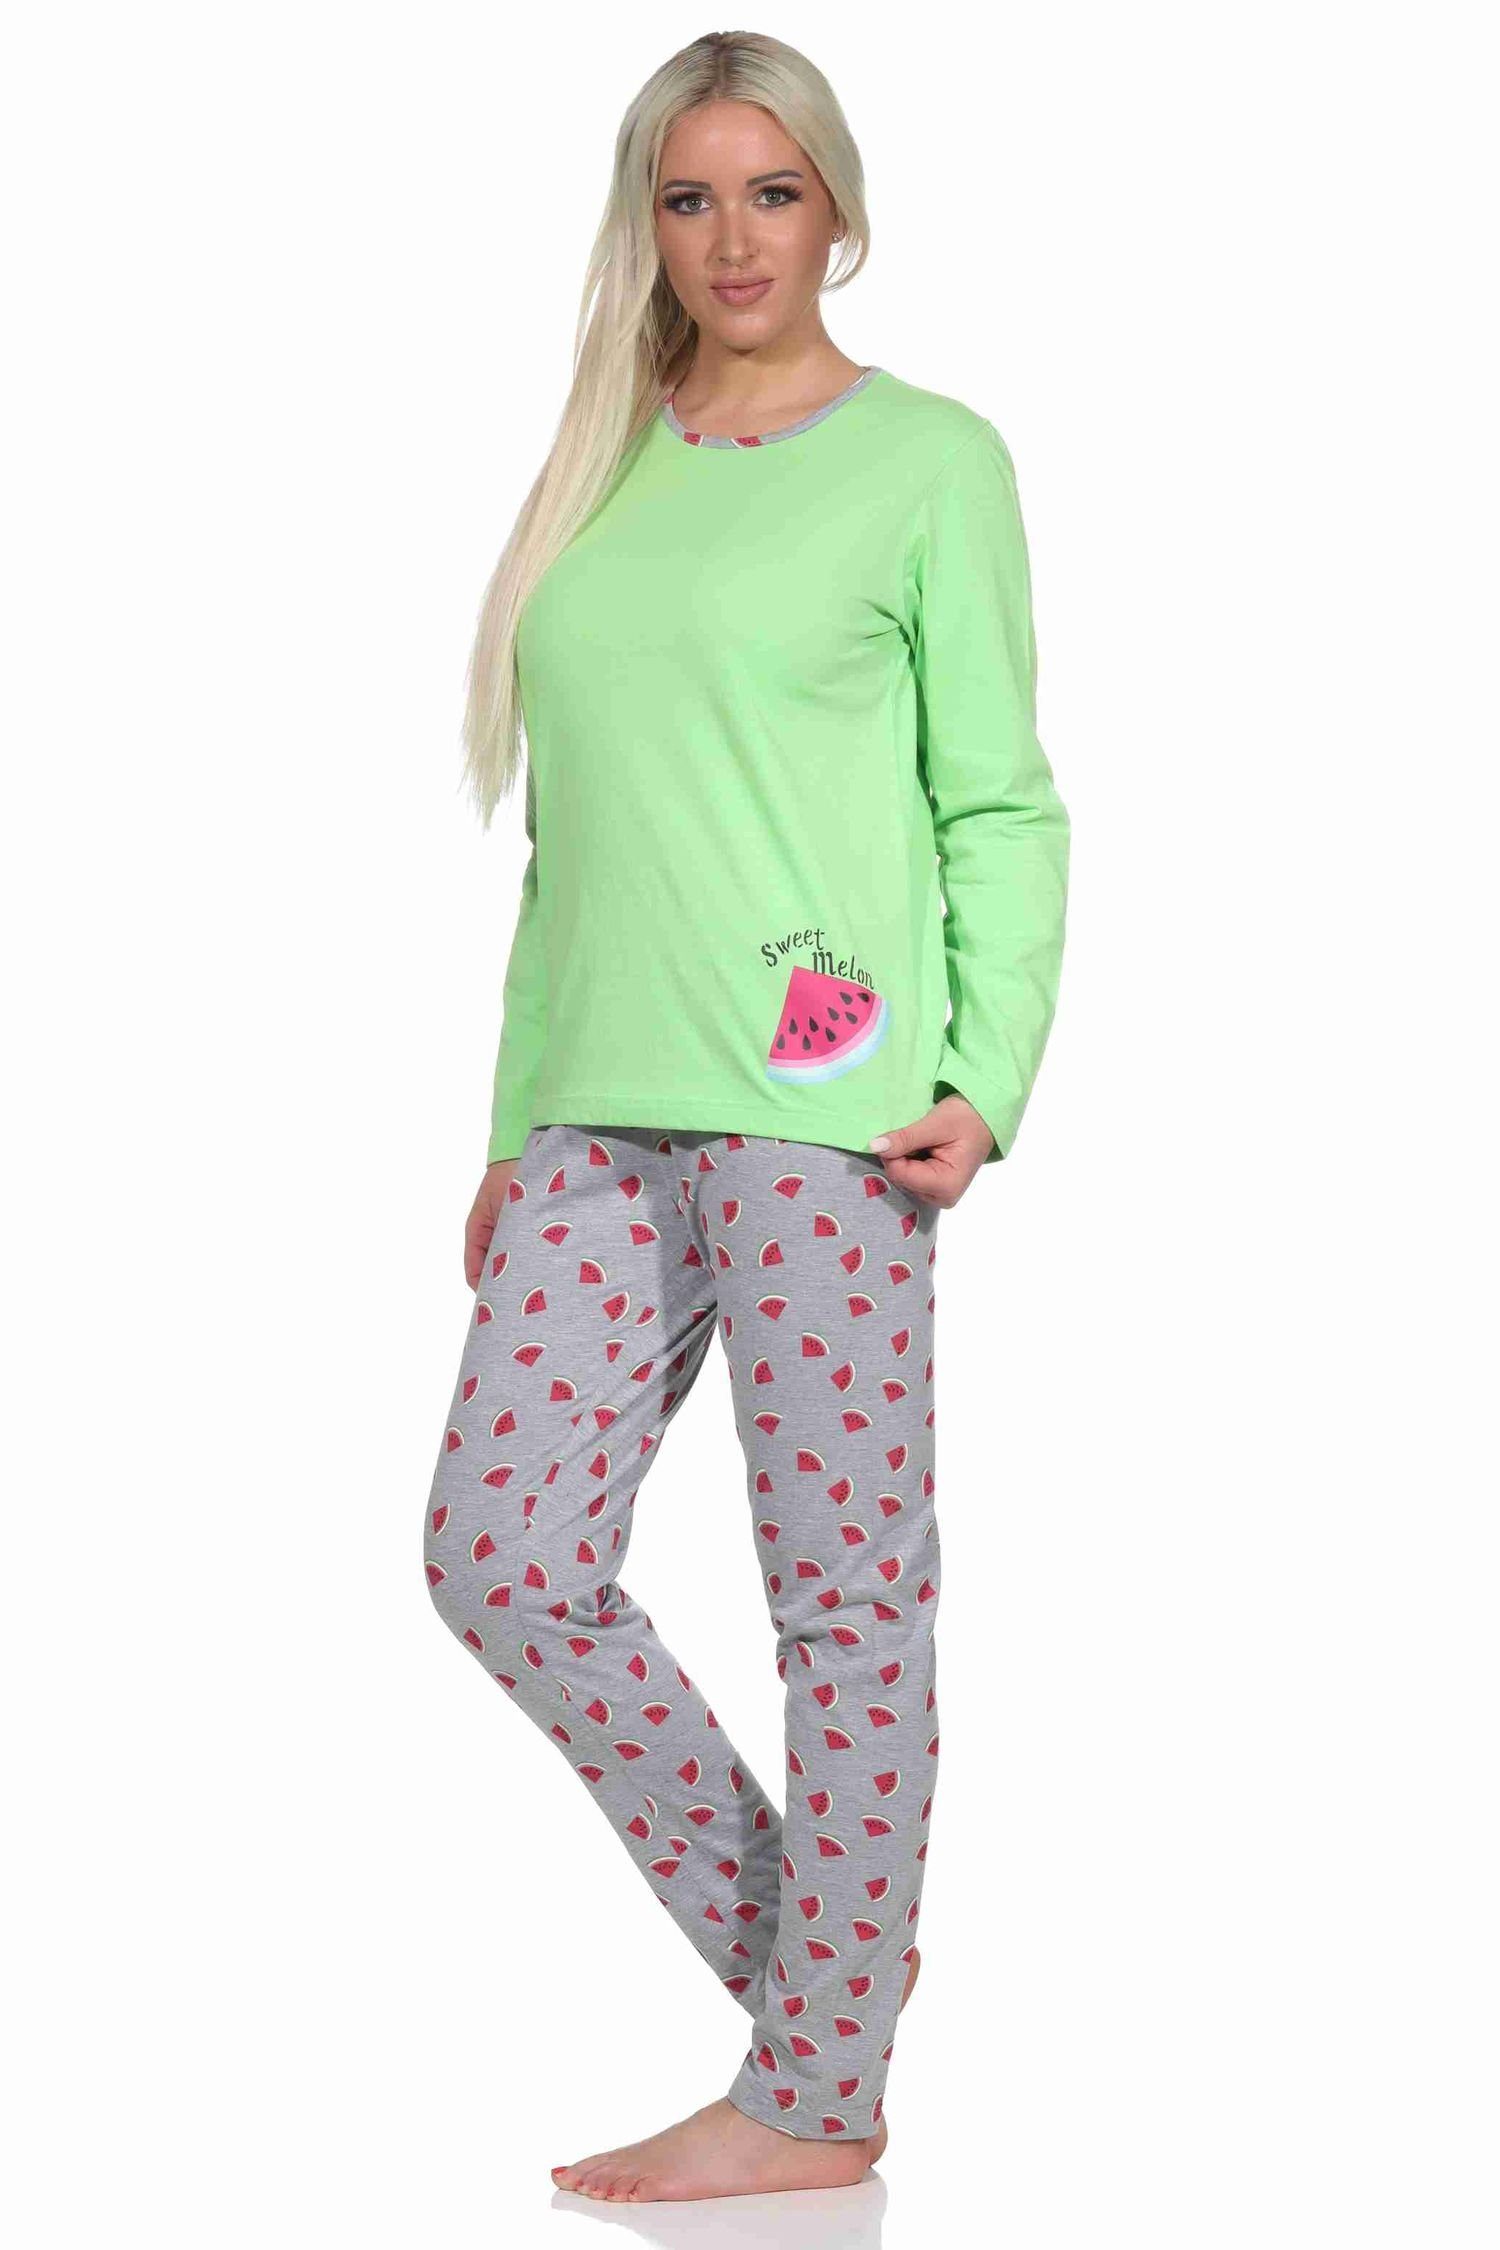 Schlafanzug Pyjama lang allover grün bedruckt Damen als Melone mit Motiv, Normann Hose